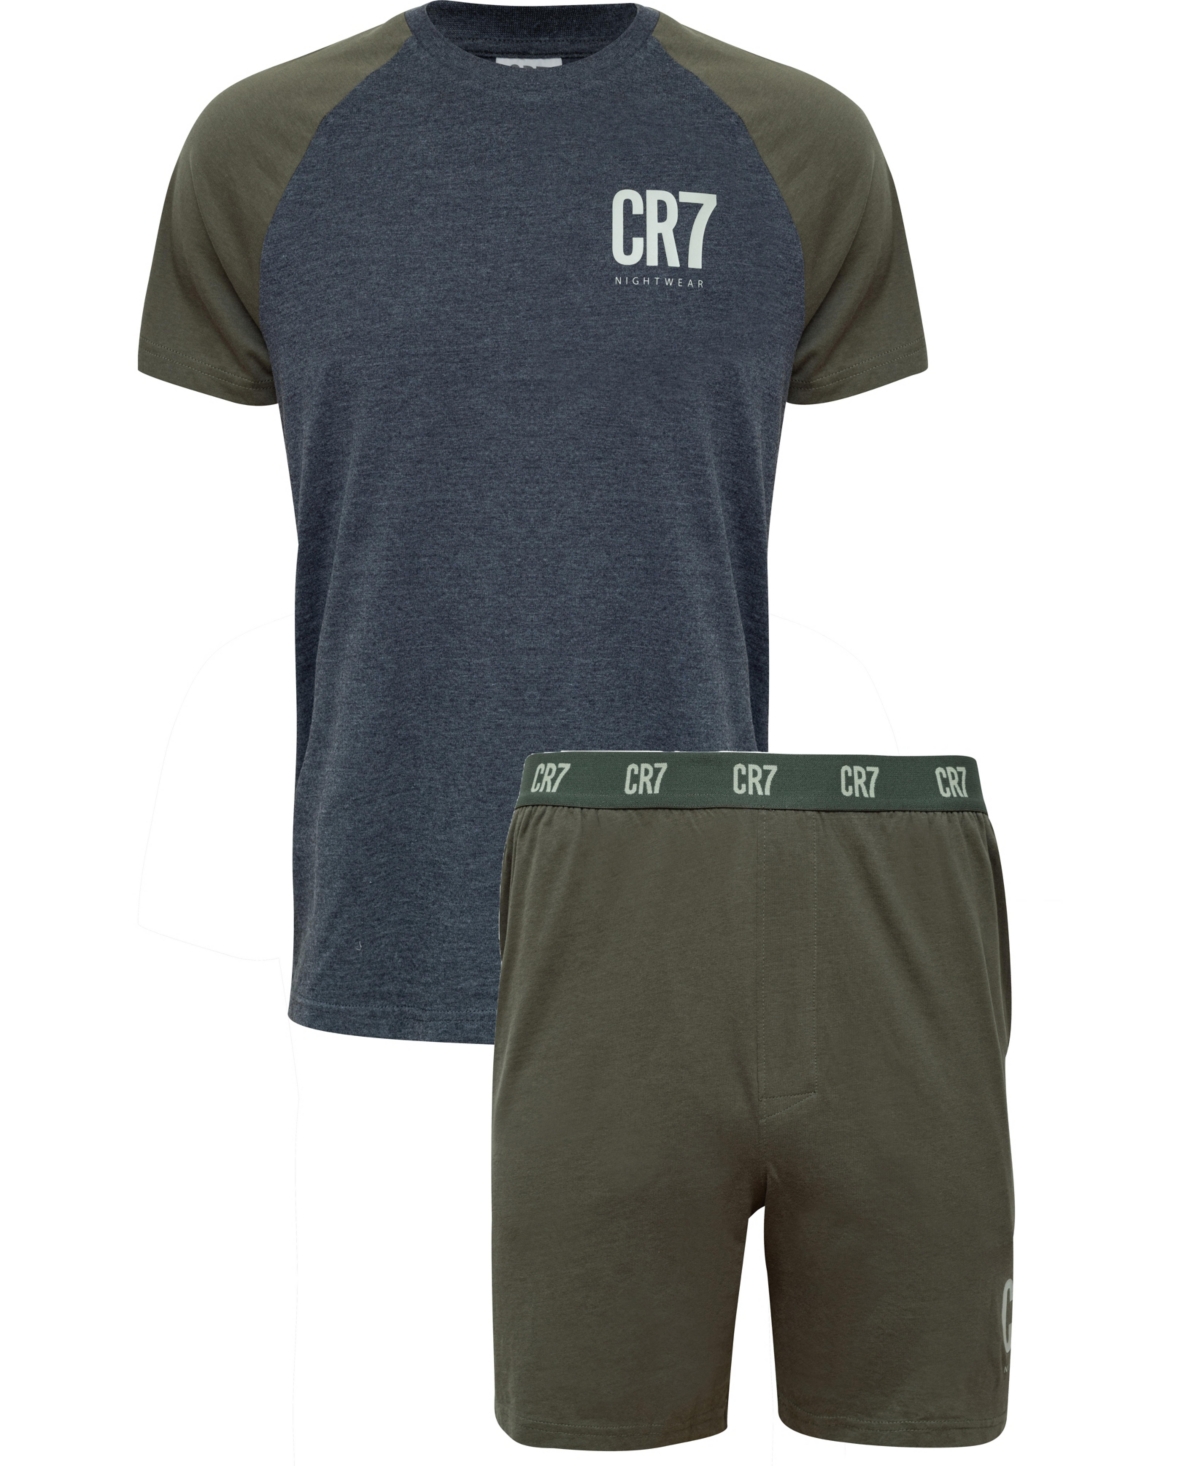 Men's Cotton Loungewear Top and Short Set - Green, Gray